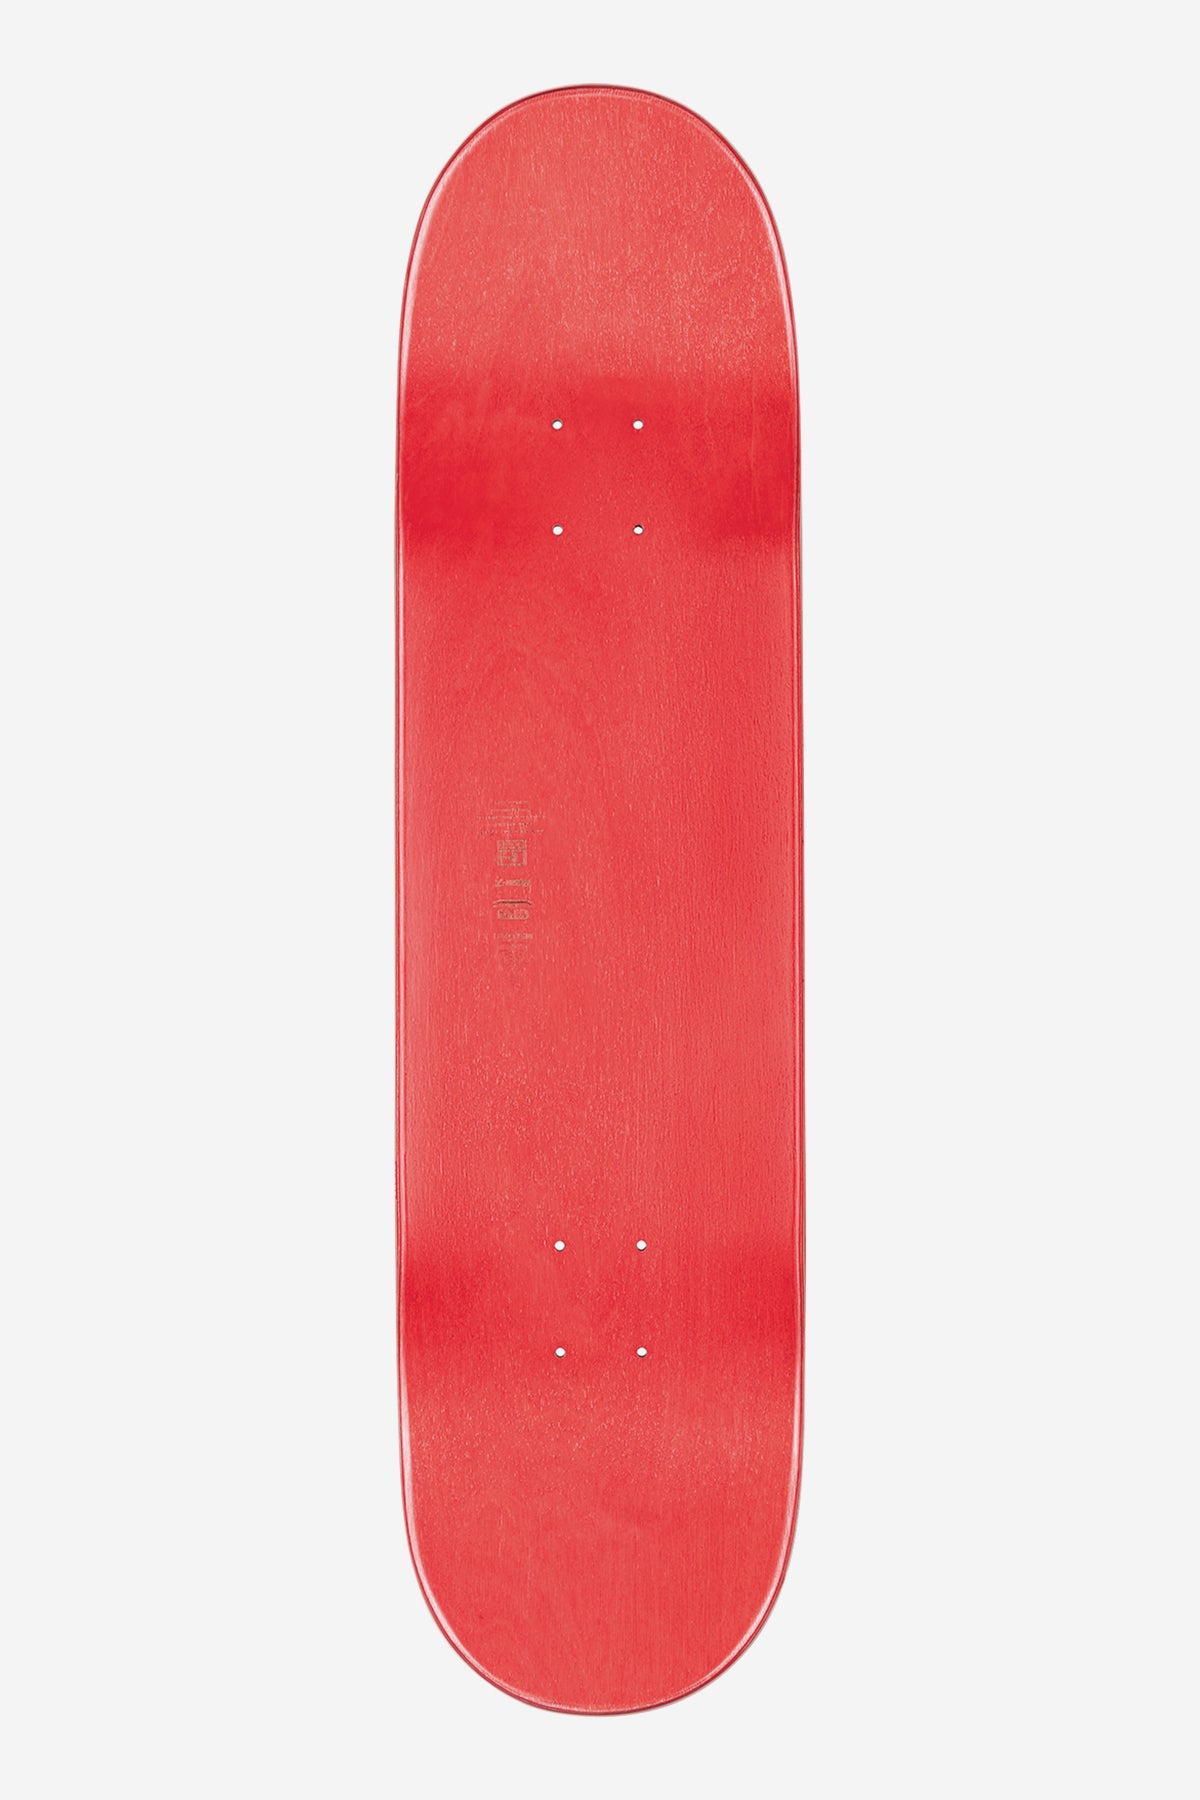 g1 stack lone palm 8.0" skateboard deck